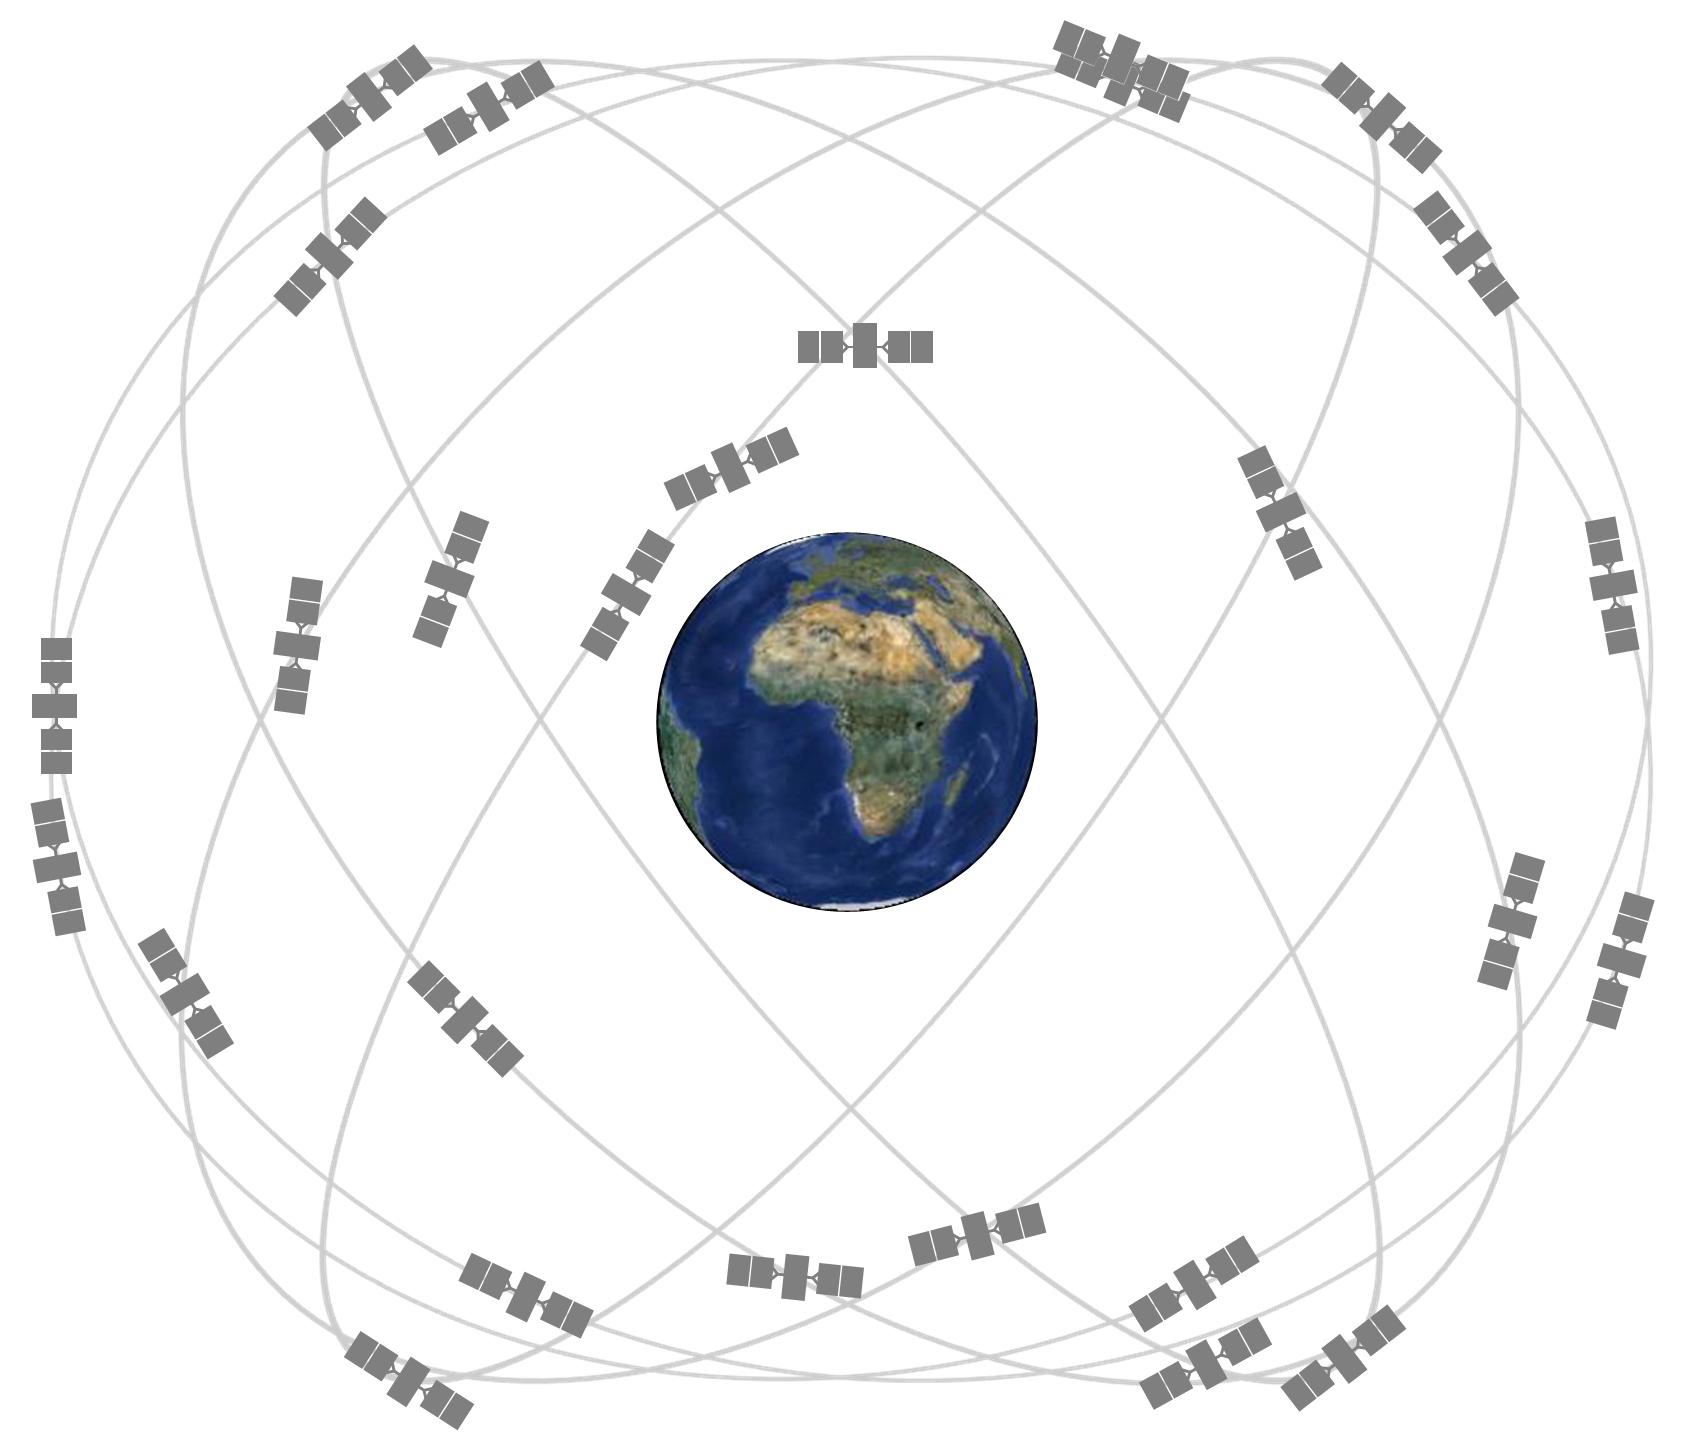 GPS constellation of satellites. Image courtesy gps.gov